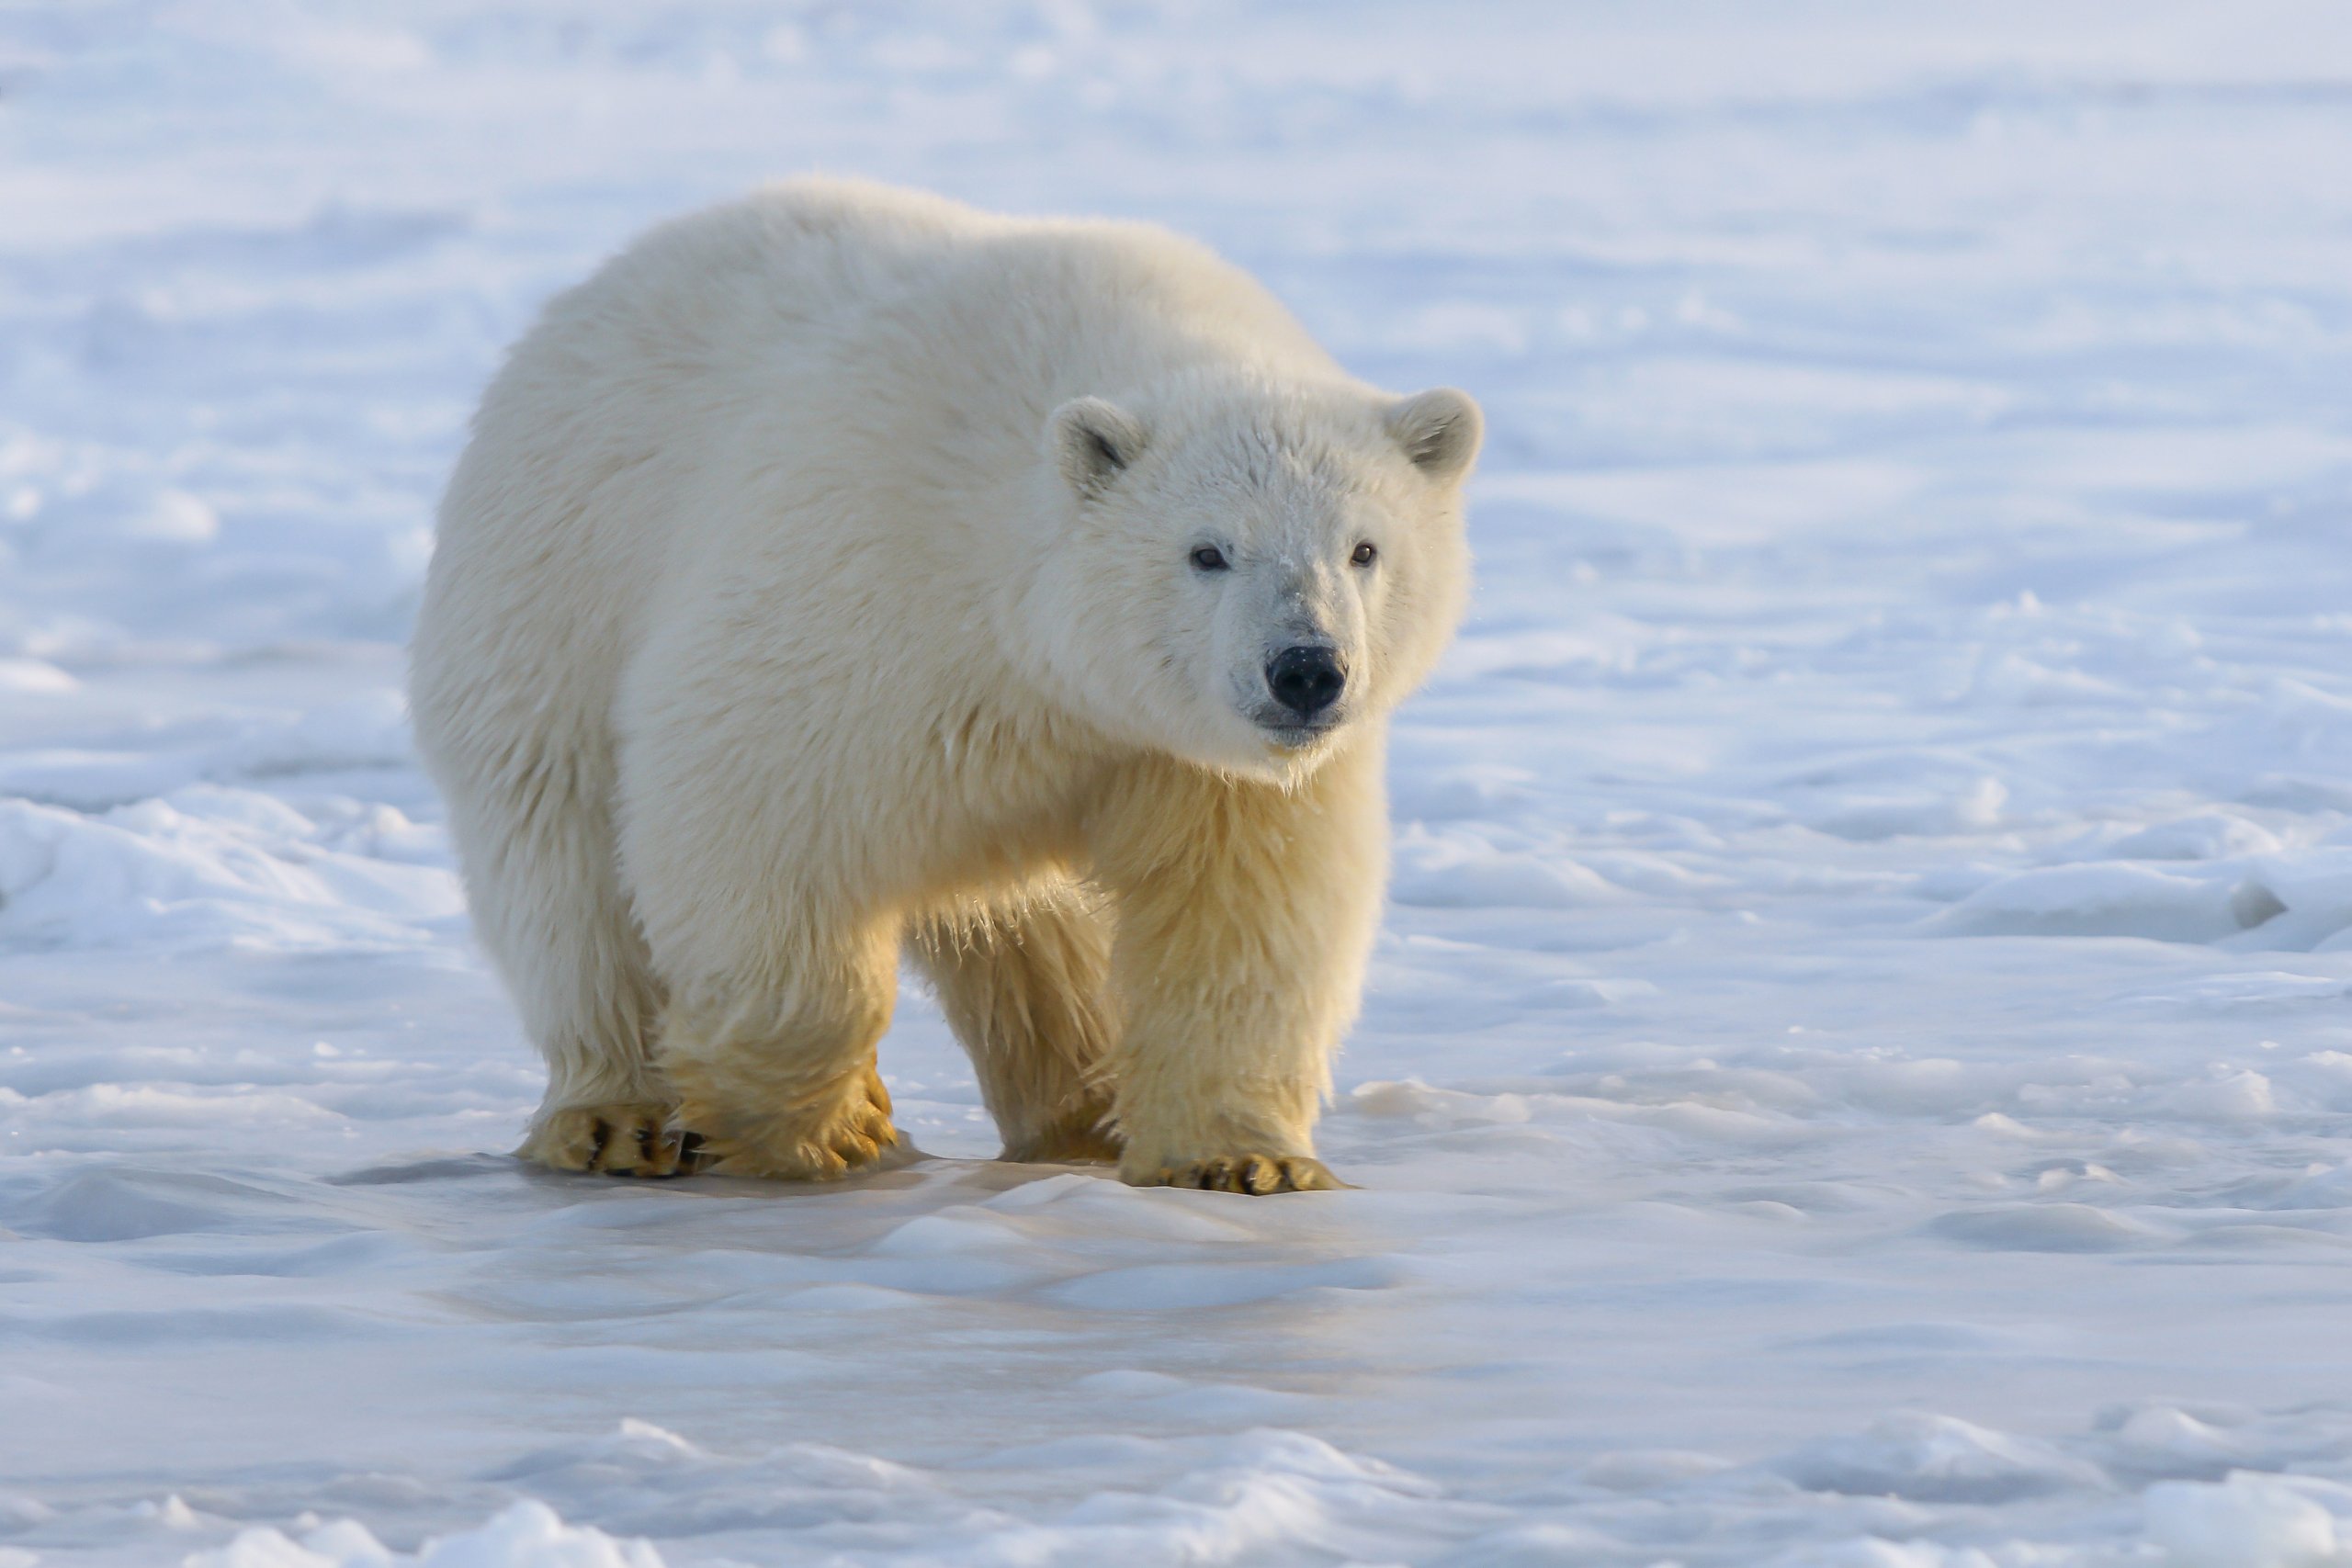 Young polar bear, northern Alaska